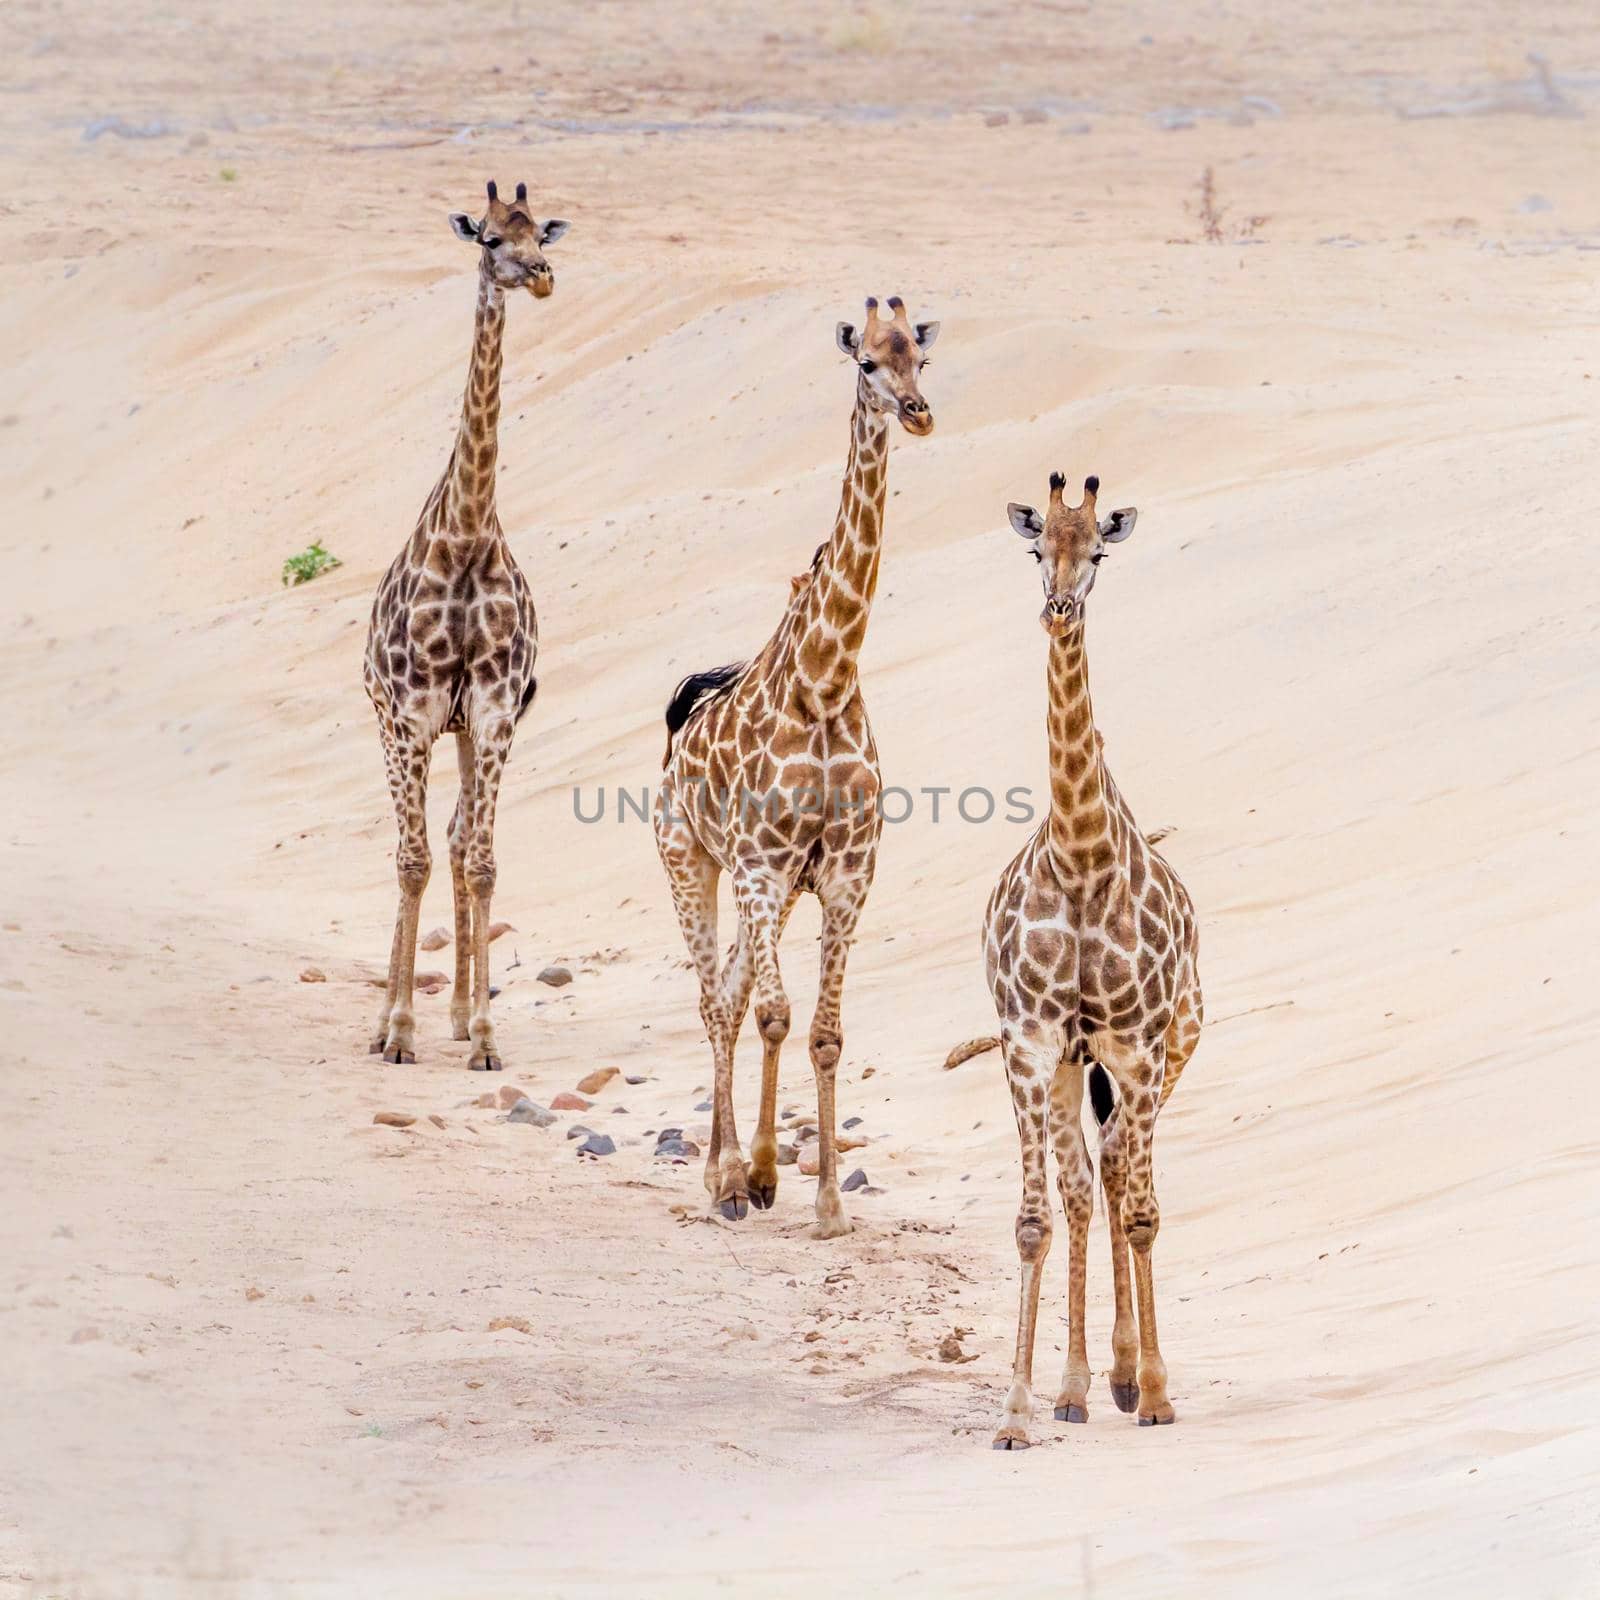 Giraffe in Kruger National park, South Africa ; Specie Giraffa camelopardalis family of Giraffidae